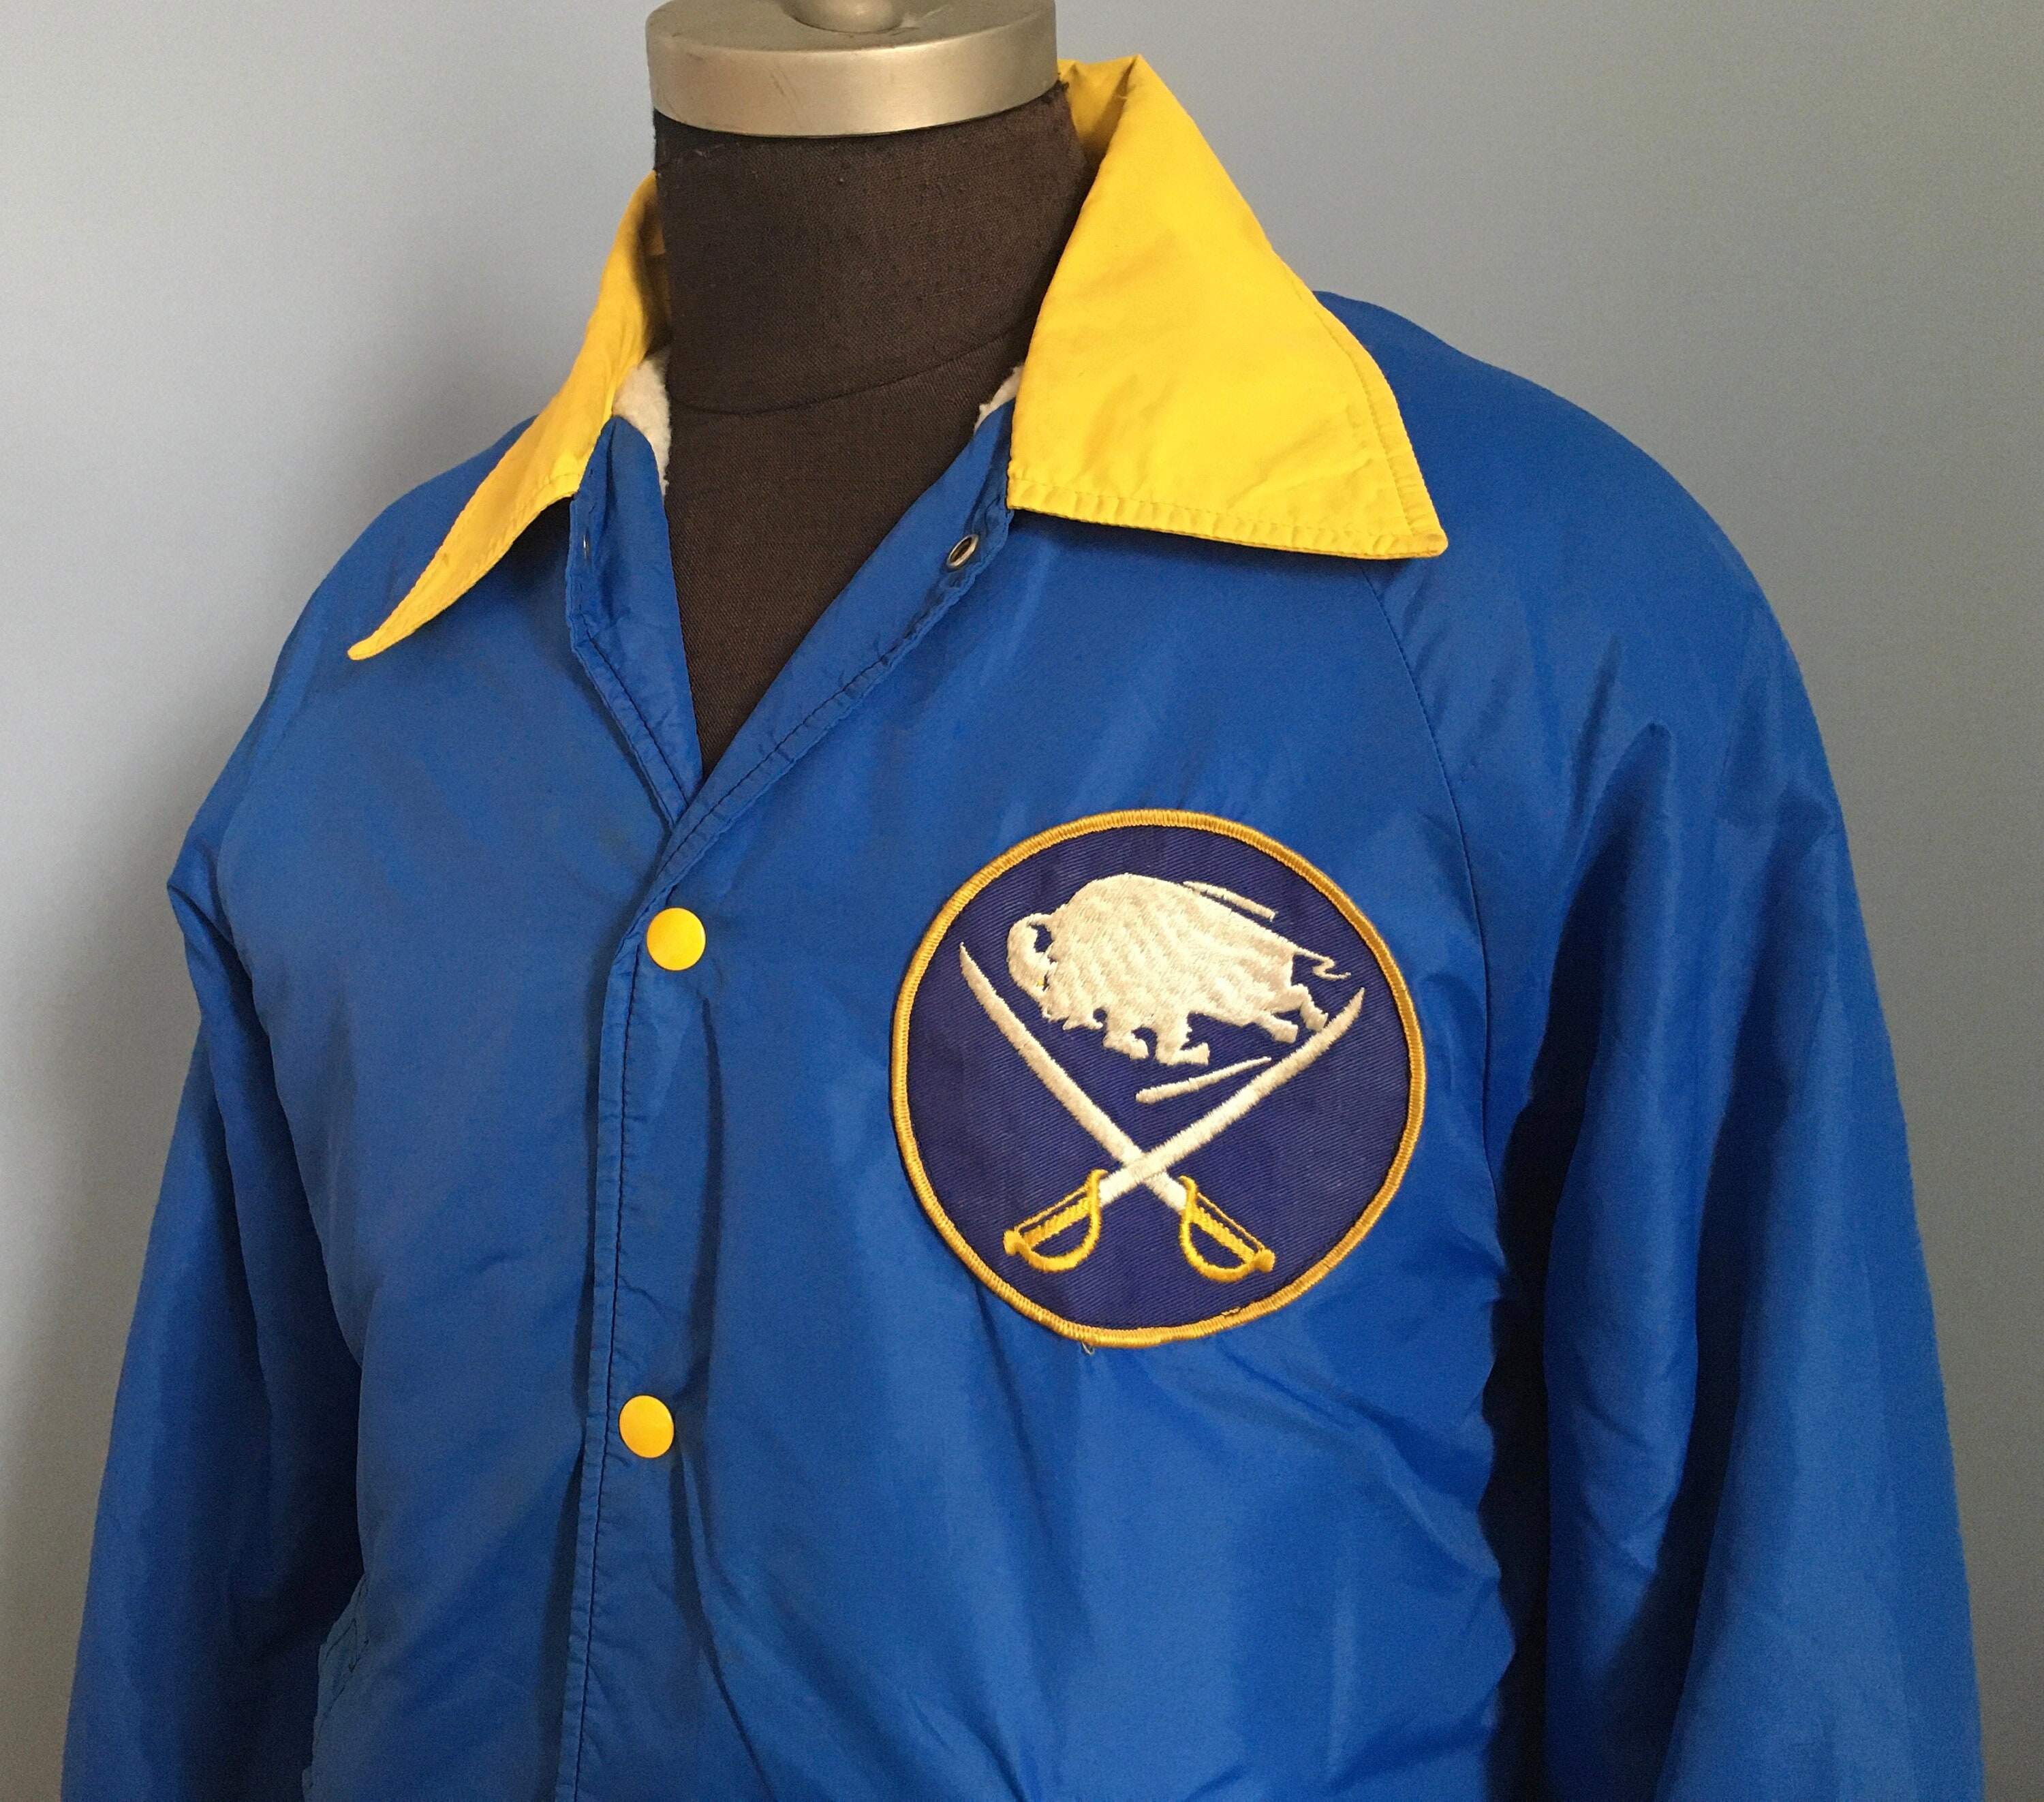 Vintage Starter Jacket Original 1990's NHL Buffalo Sabres Goat Head Hockey  XL